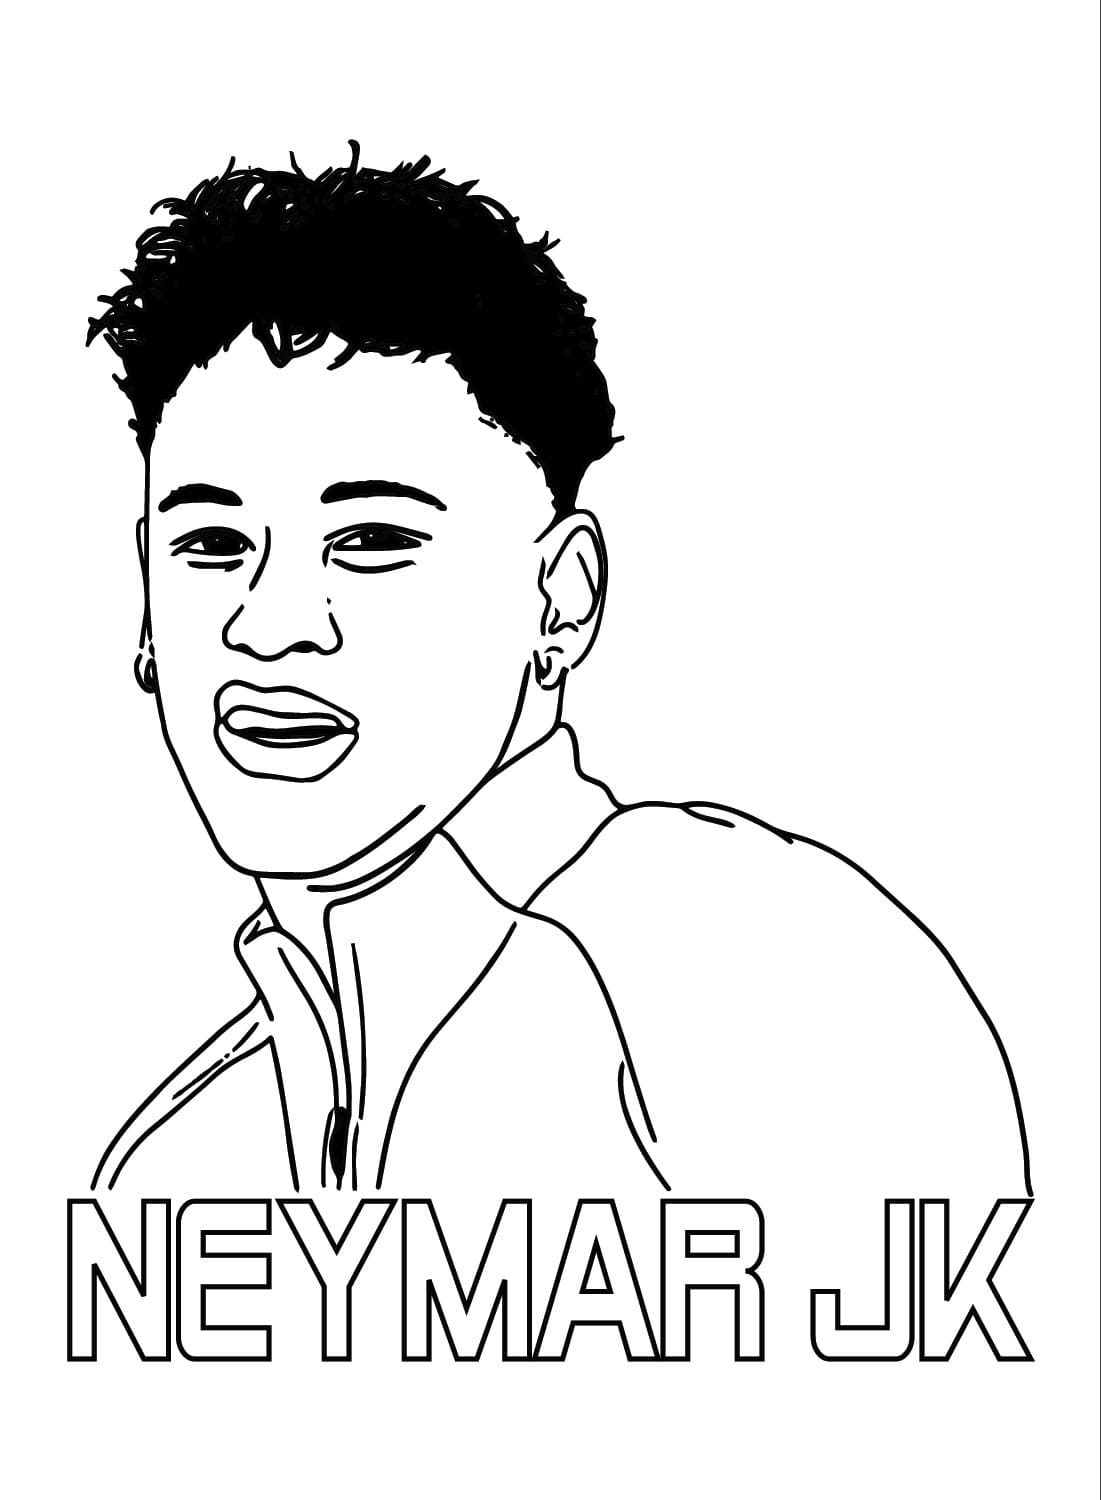 How To Draw Neymar (Barca) | Step By Step | Football / Soccer - YouTube